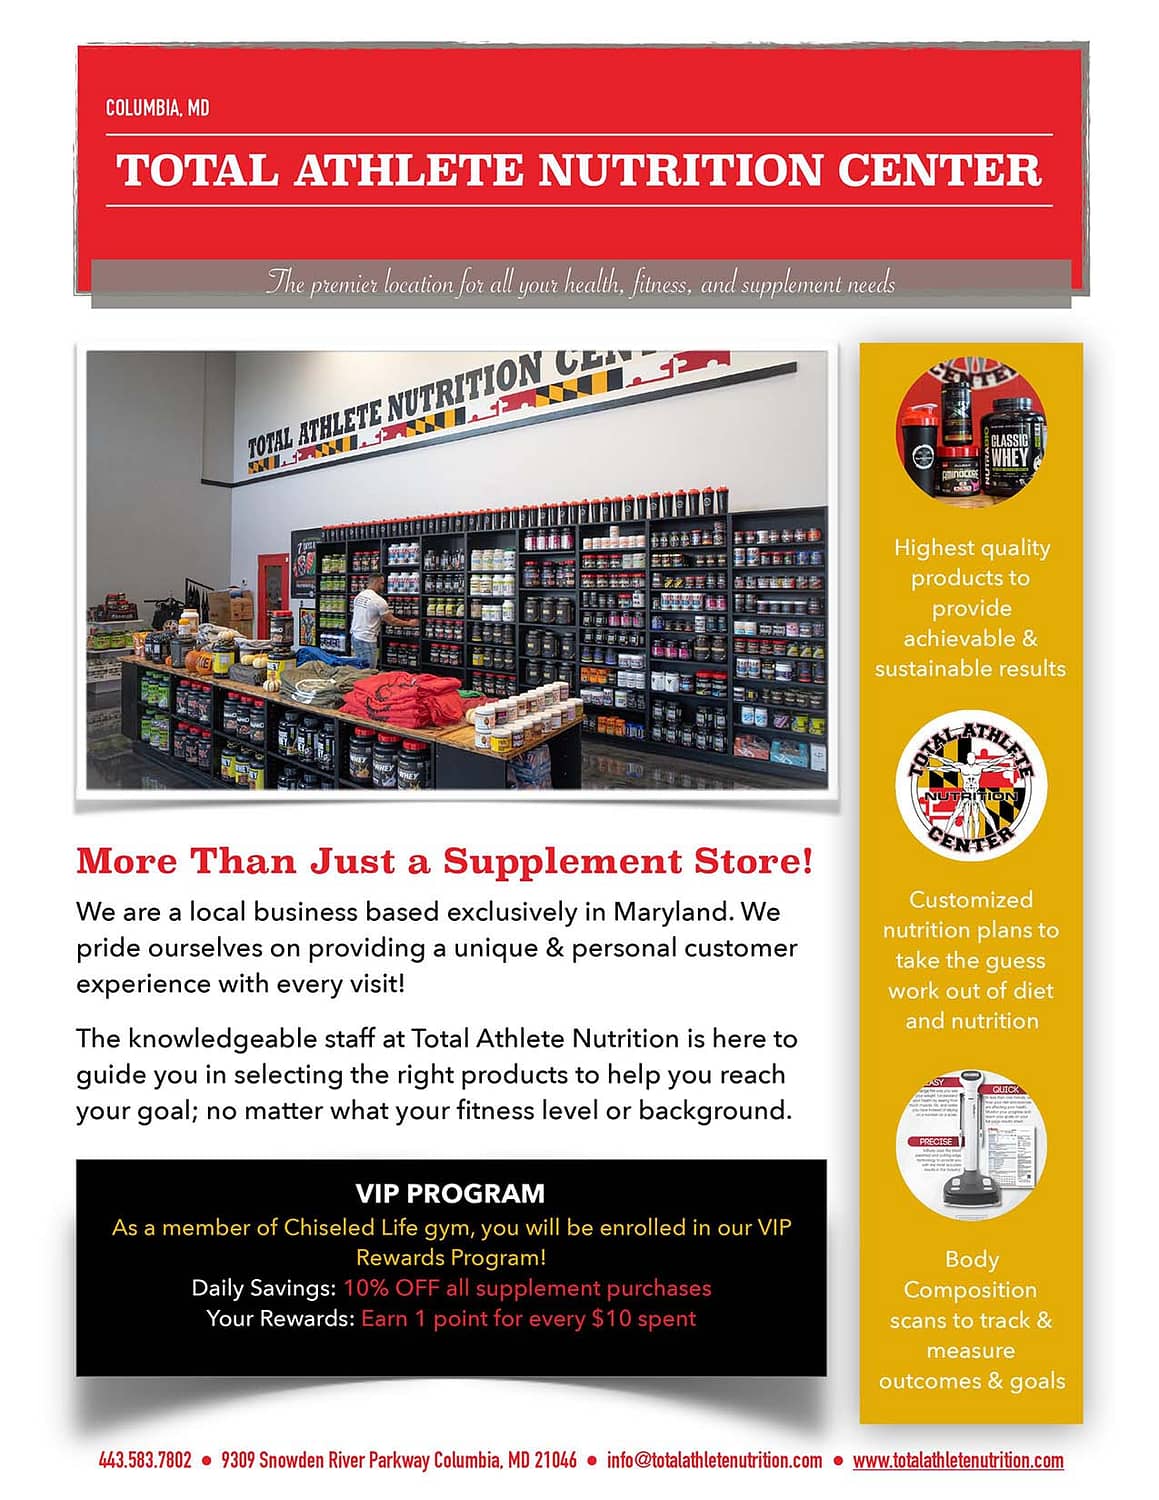 total athlete nutrition center